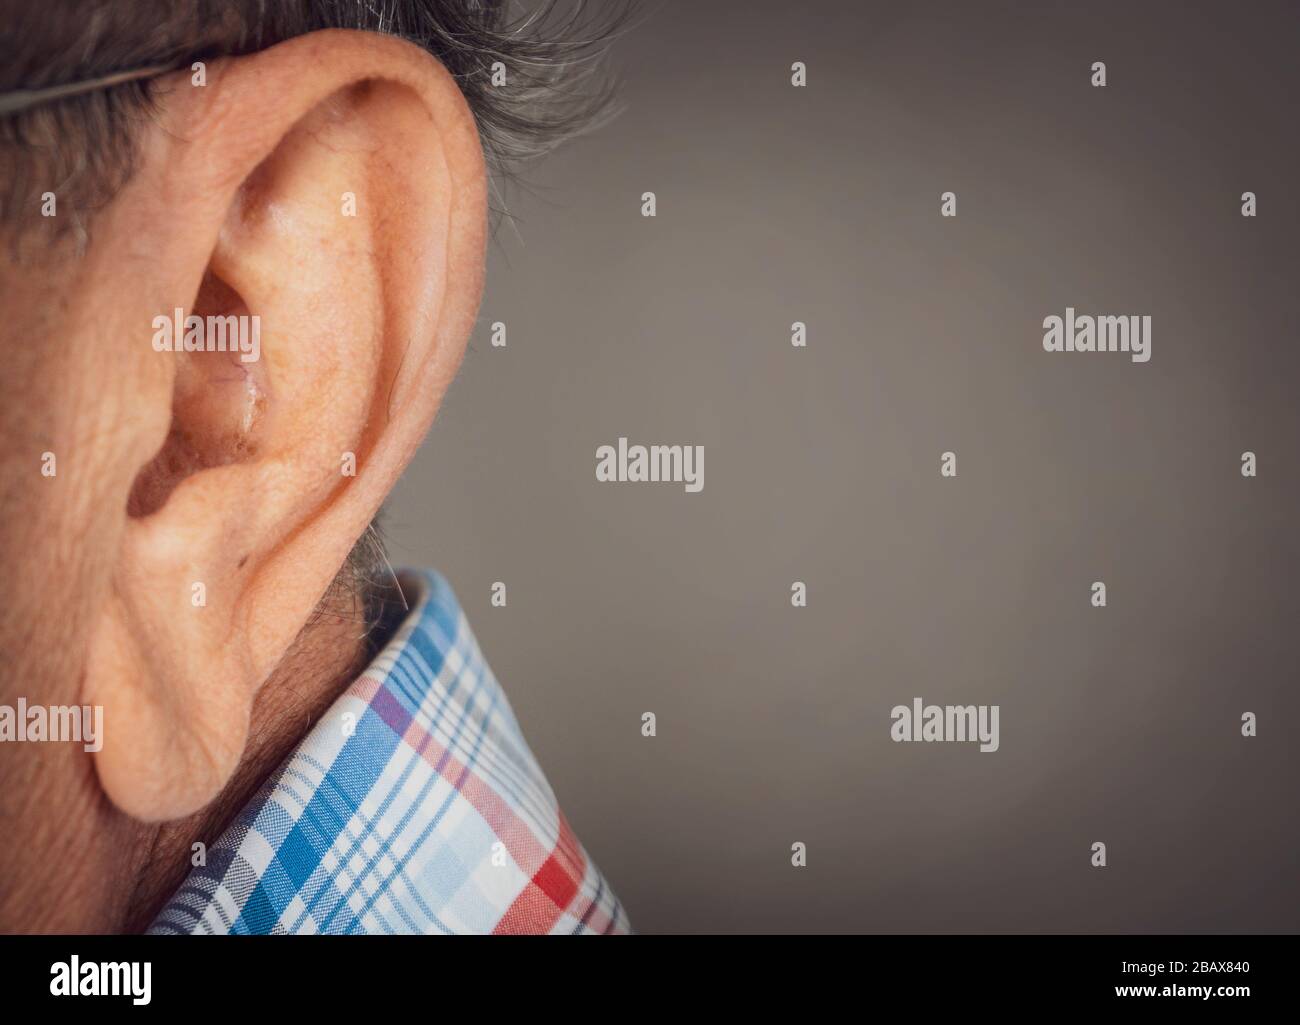 human ear macro detail close-up shot Stock Photo